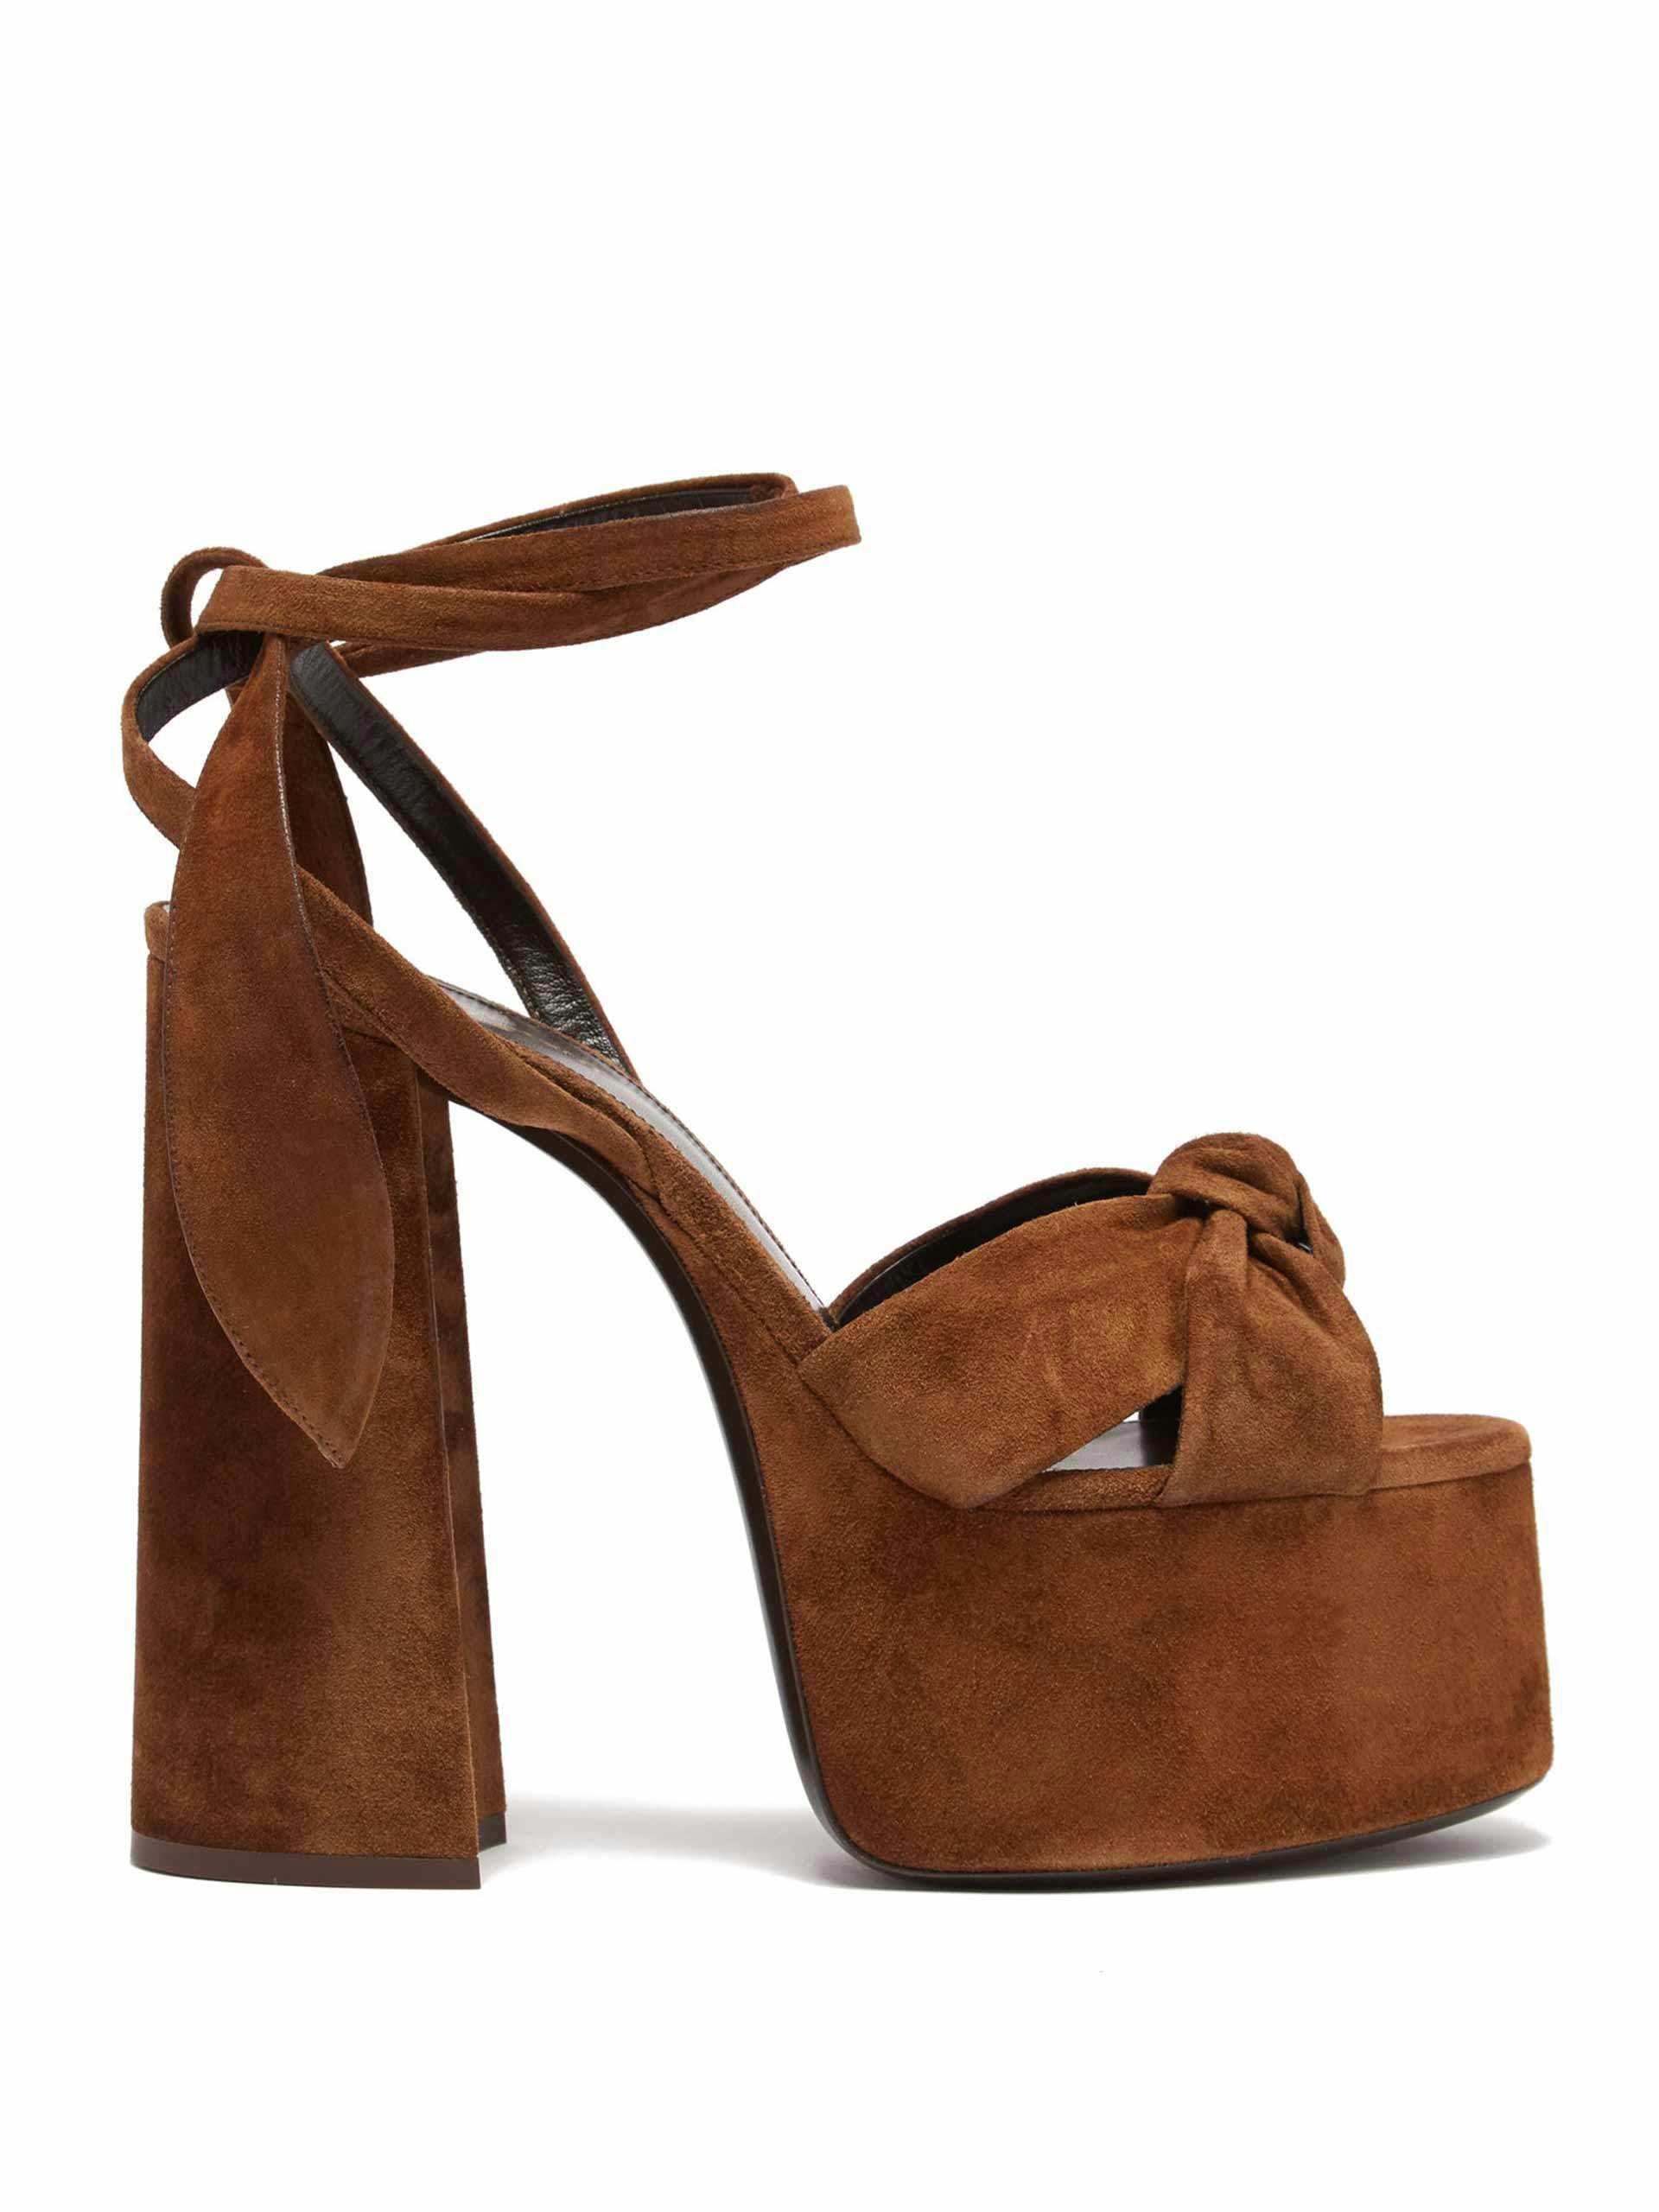 Brown suede platform heels